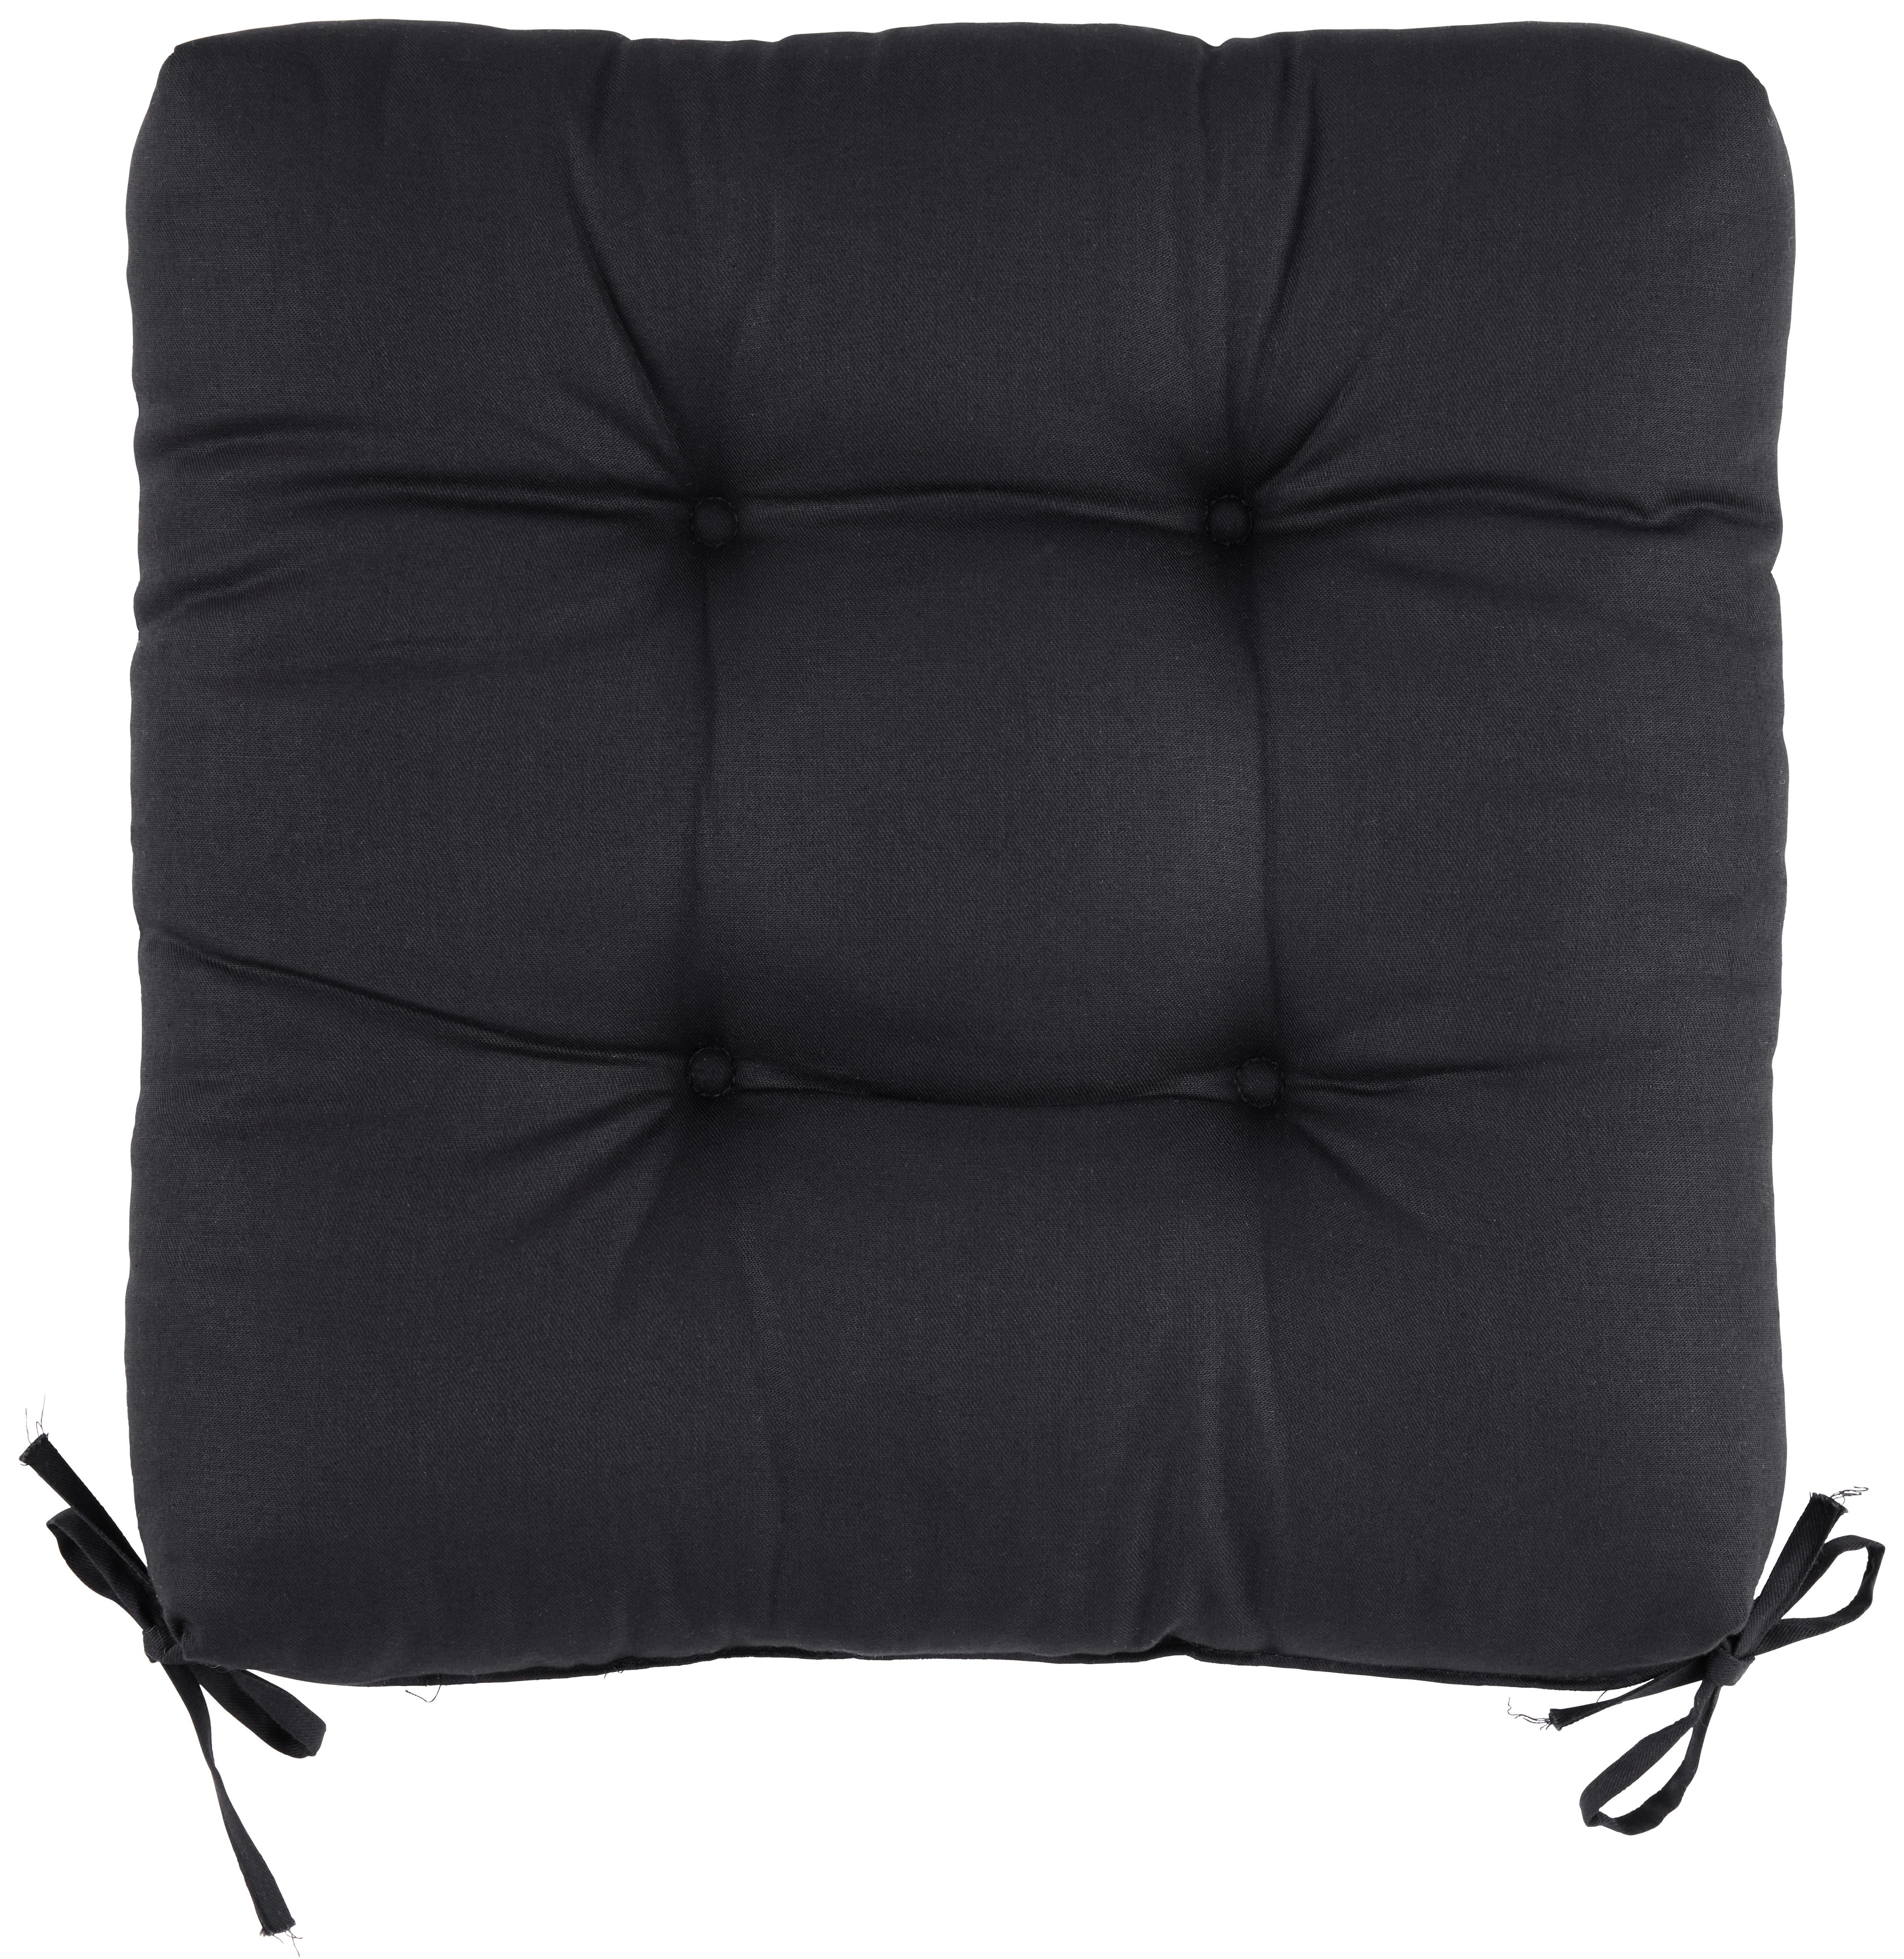 Sedežna Blazina Elli - črna, Konvencionalno (40/40/7cm) - Modern Living